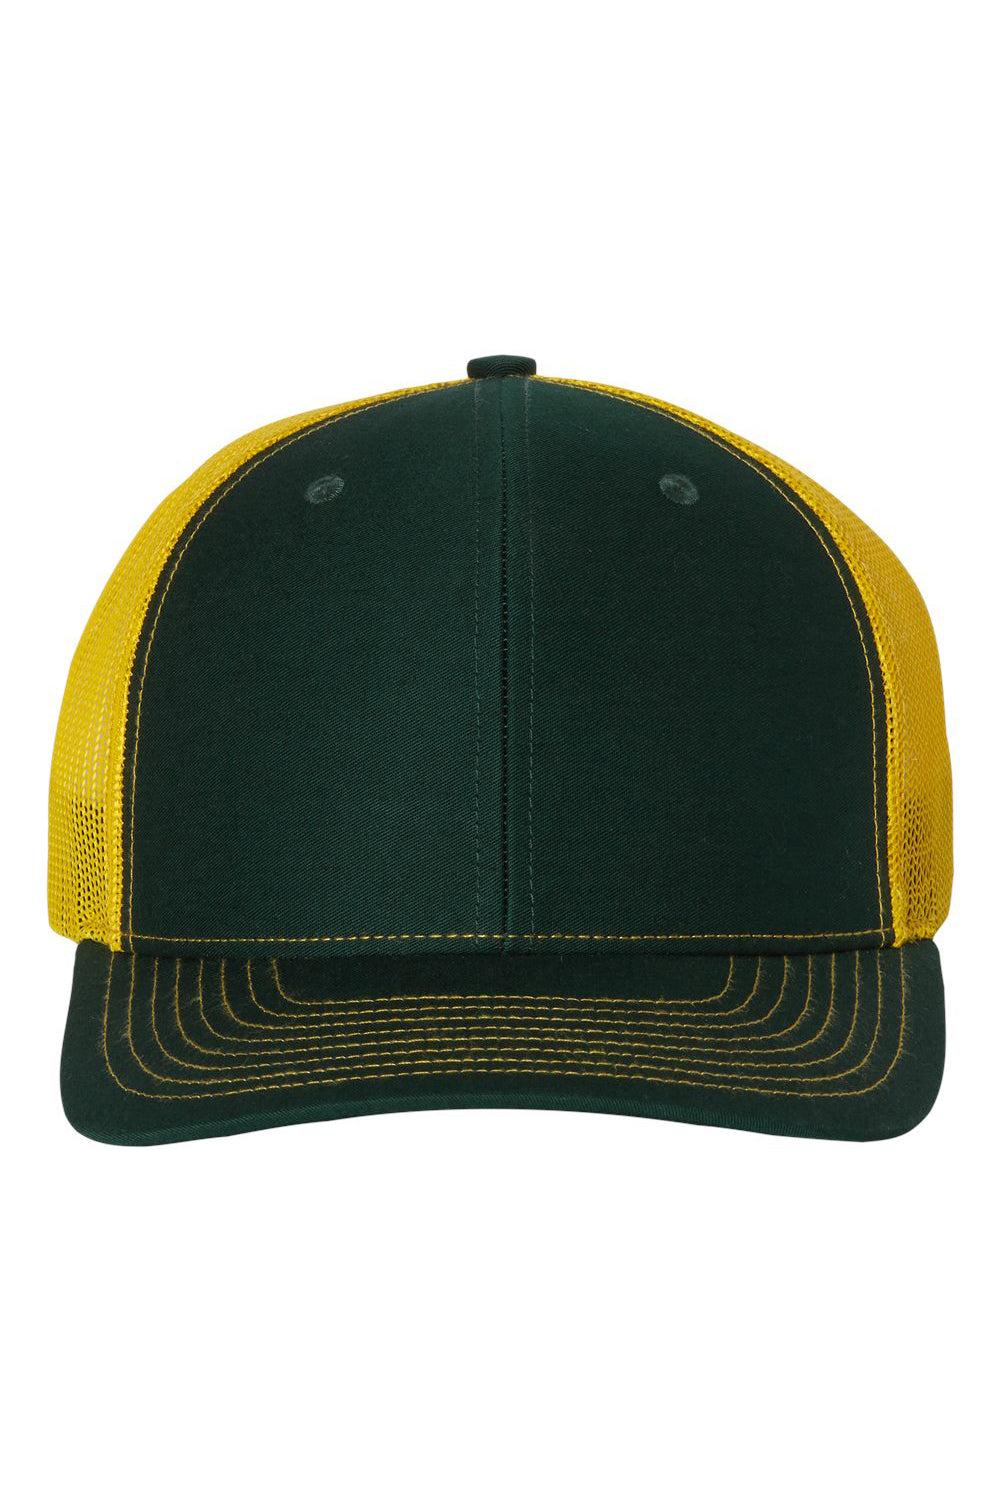 Richardson 112 Mens Snapback Trucker Hat Dark Green/Yellow Flat Front